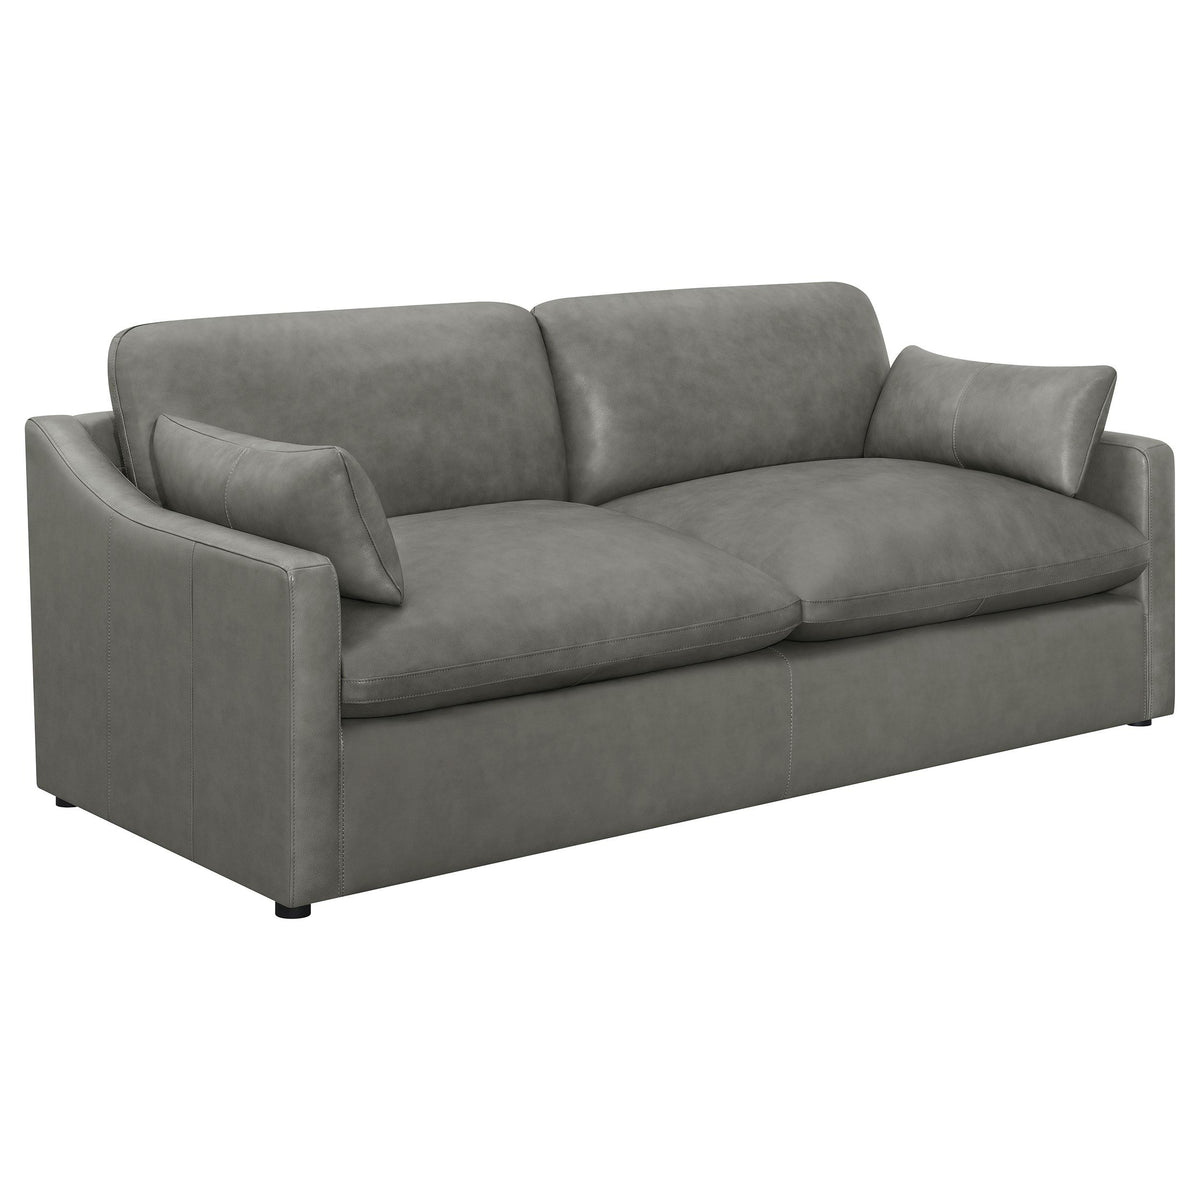 Grayson Sloped Arm Upholstered Sofa Grey Grayson Sloped Arm Upholstered Sofa Grey Half Price Furniture